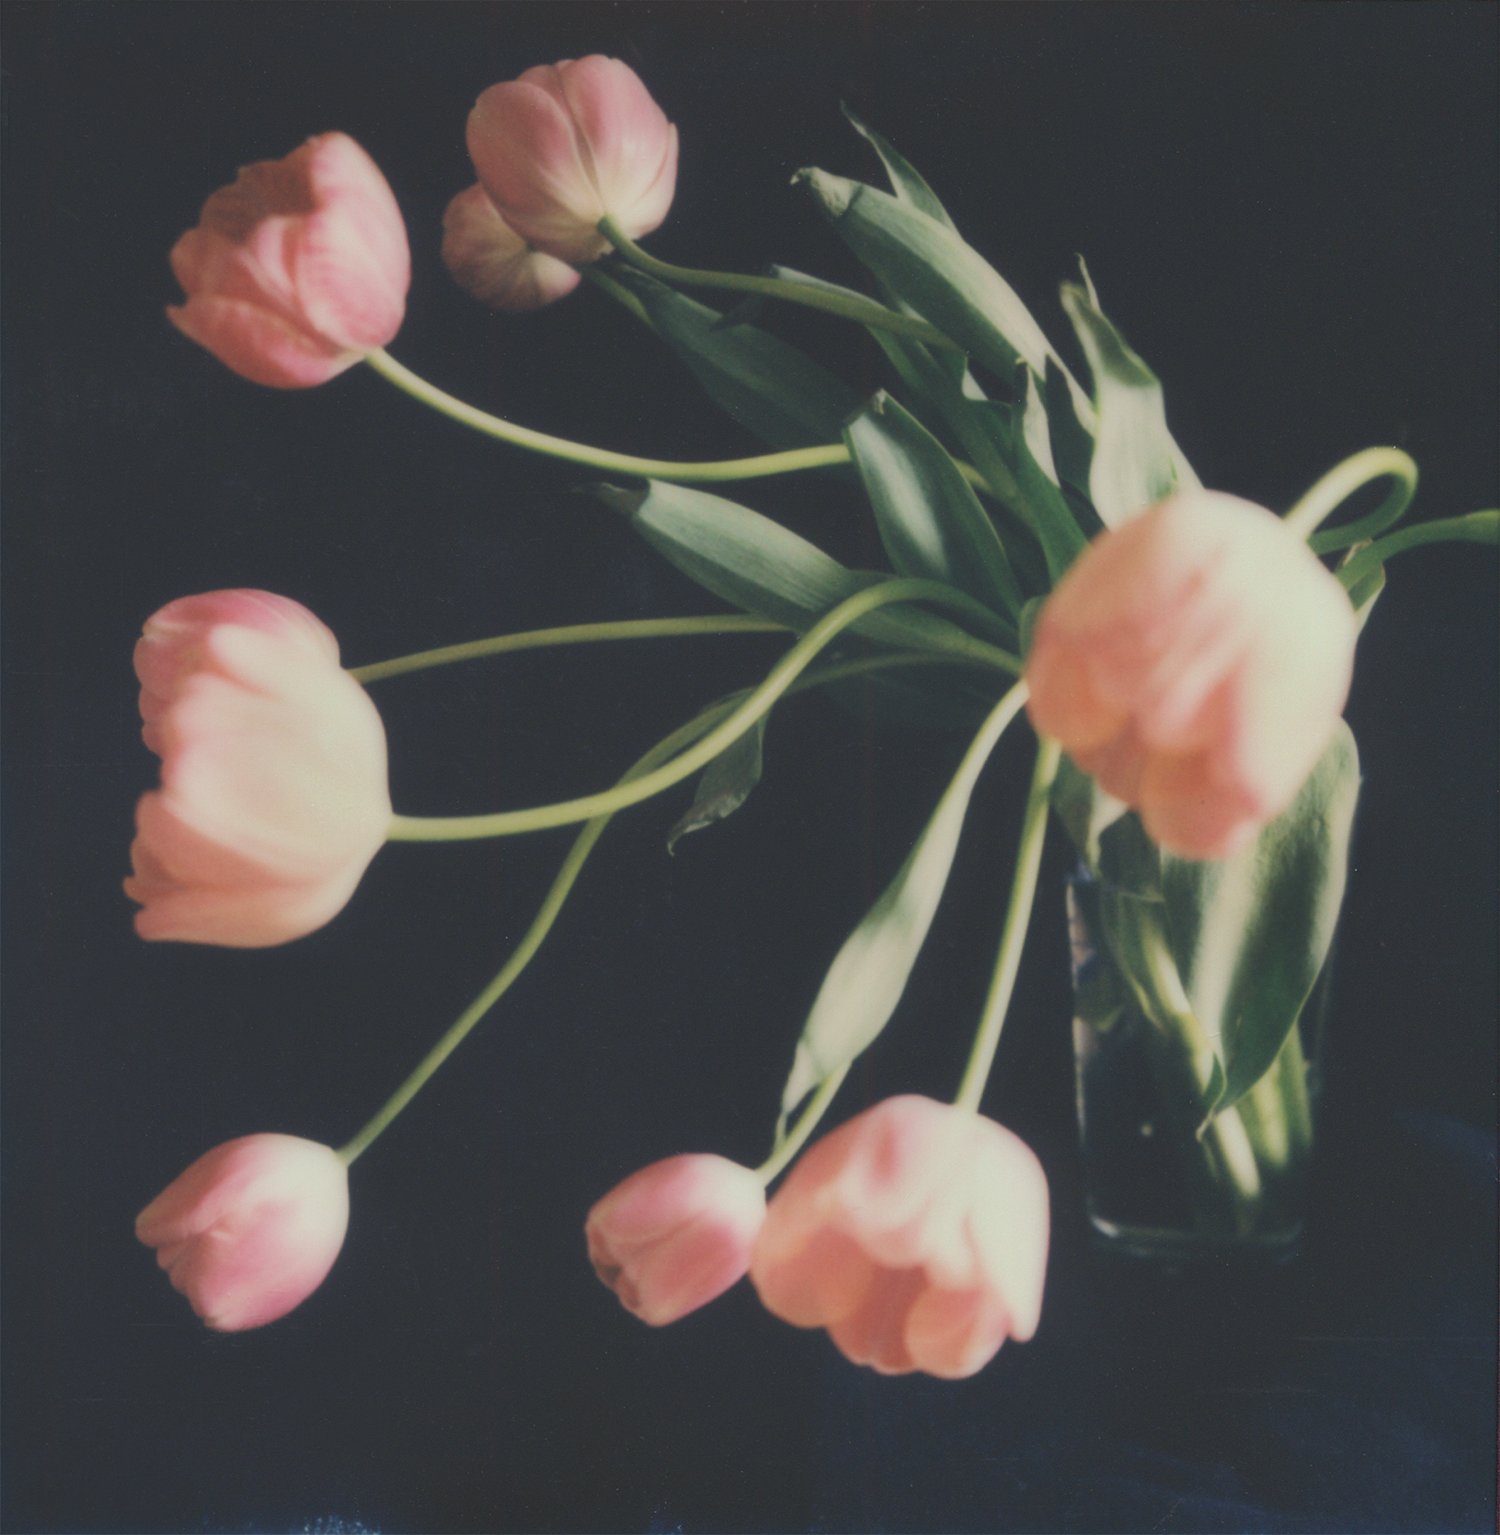  Tulips Polaroid SX-70 